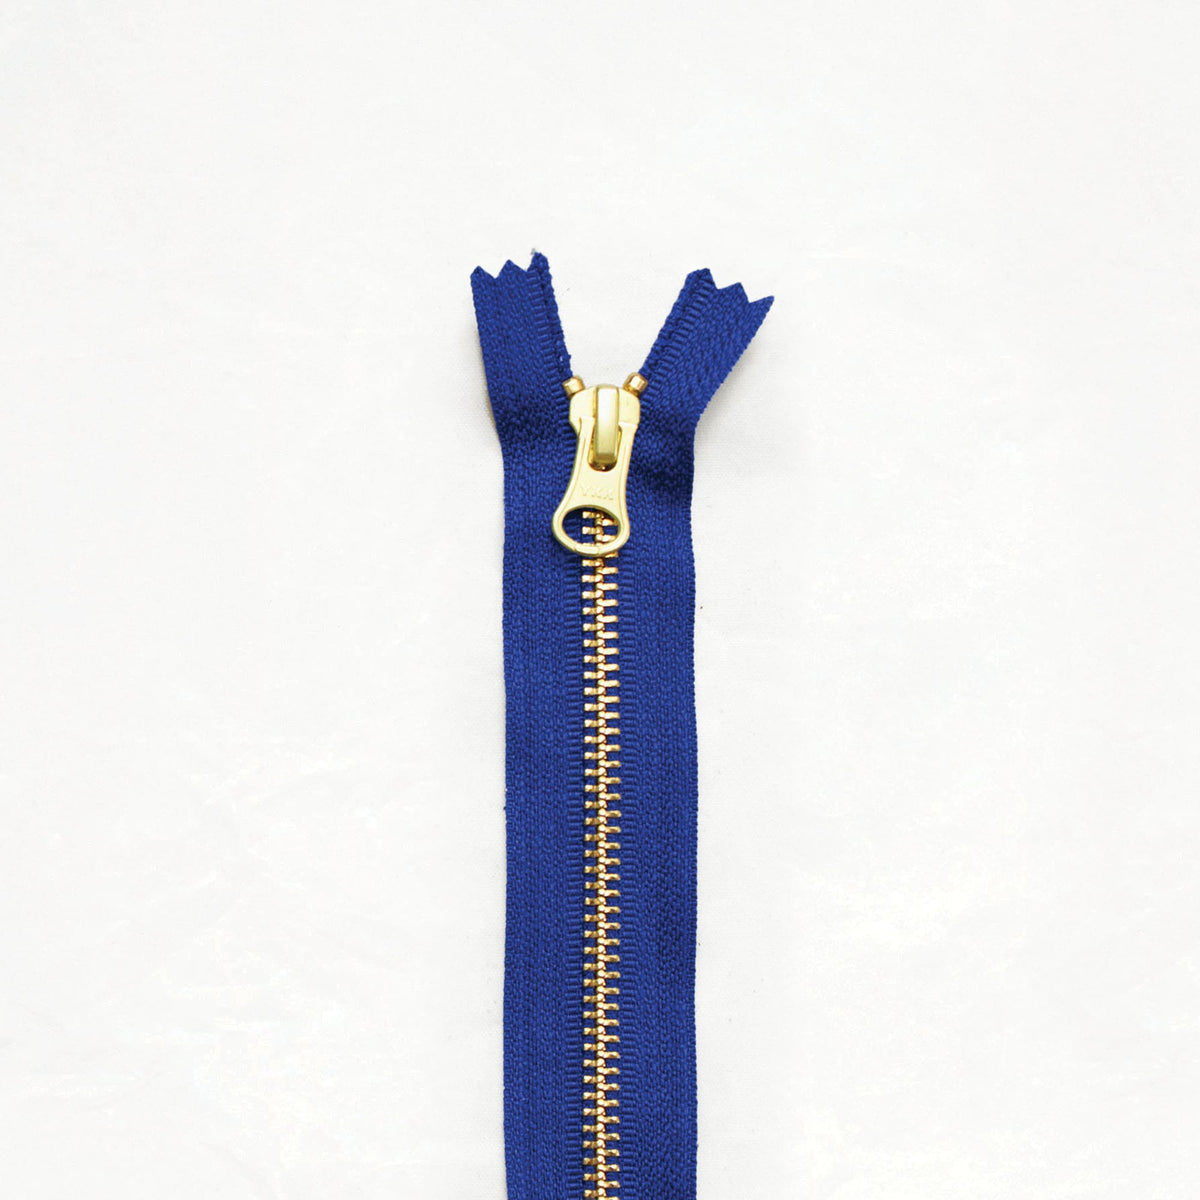 12" Brass Zippers - Wholesale